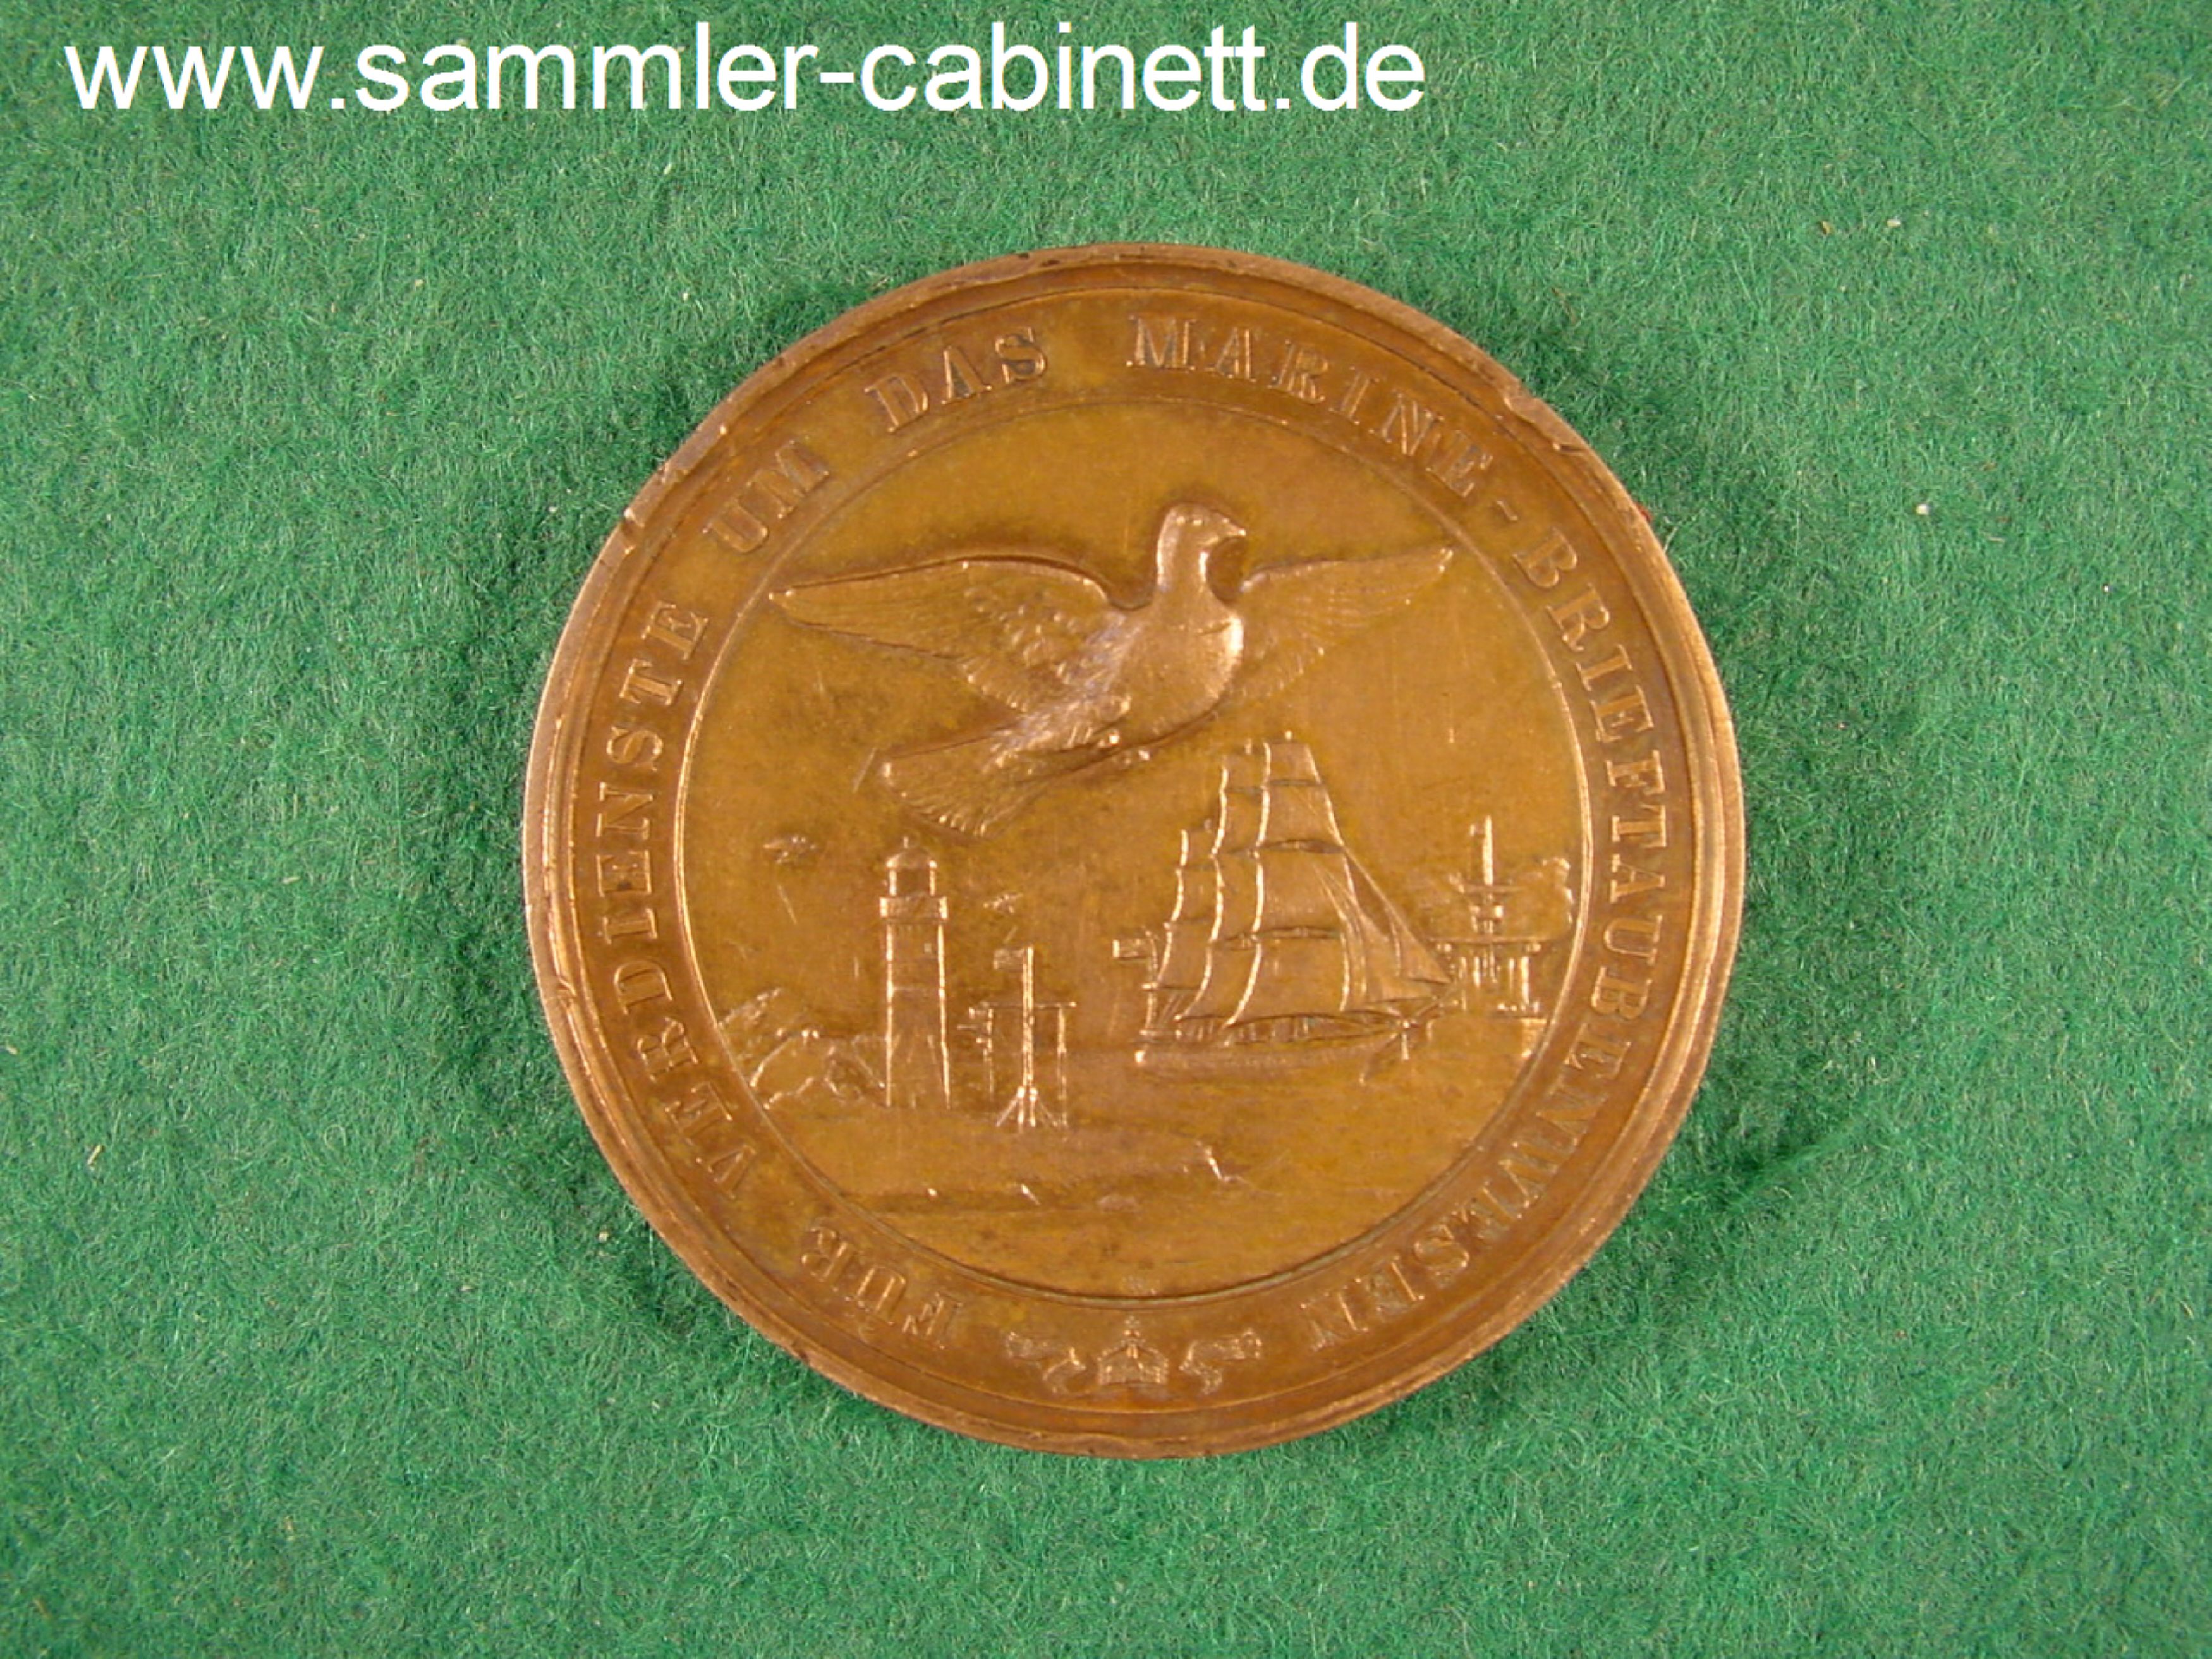 Marine - Brieftaubenwesen - Verdienstmed. in Bronze -...